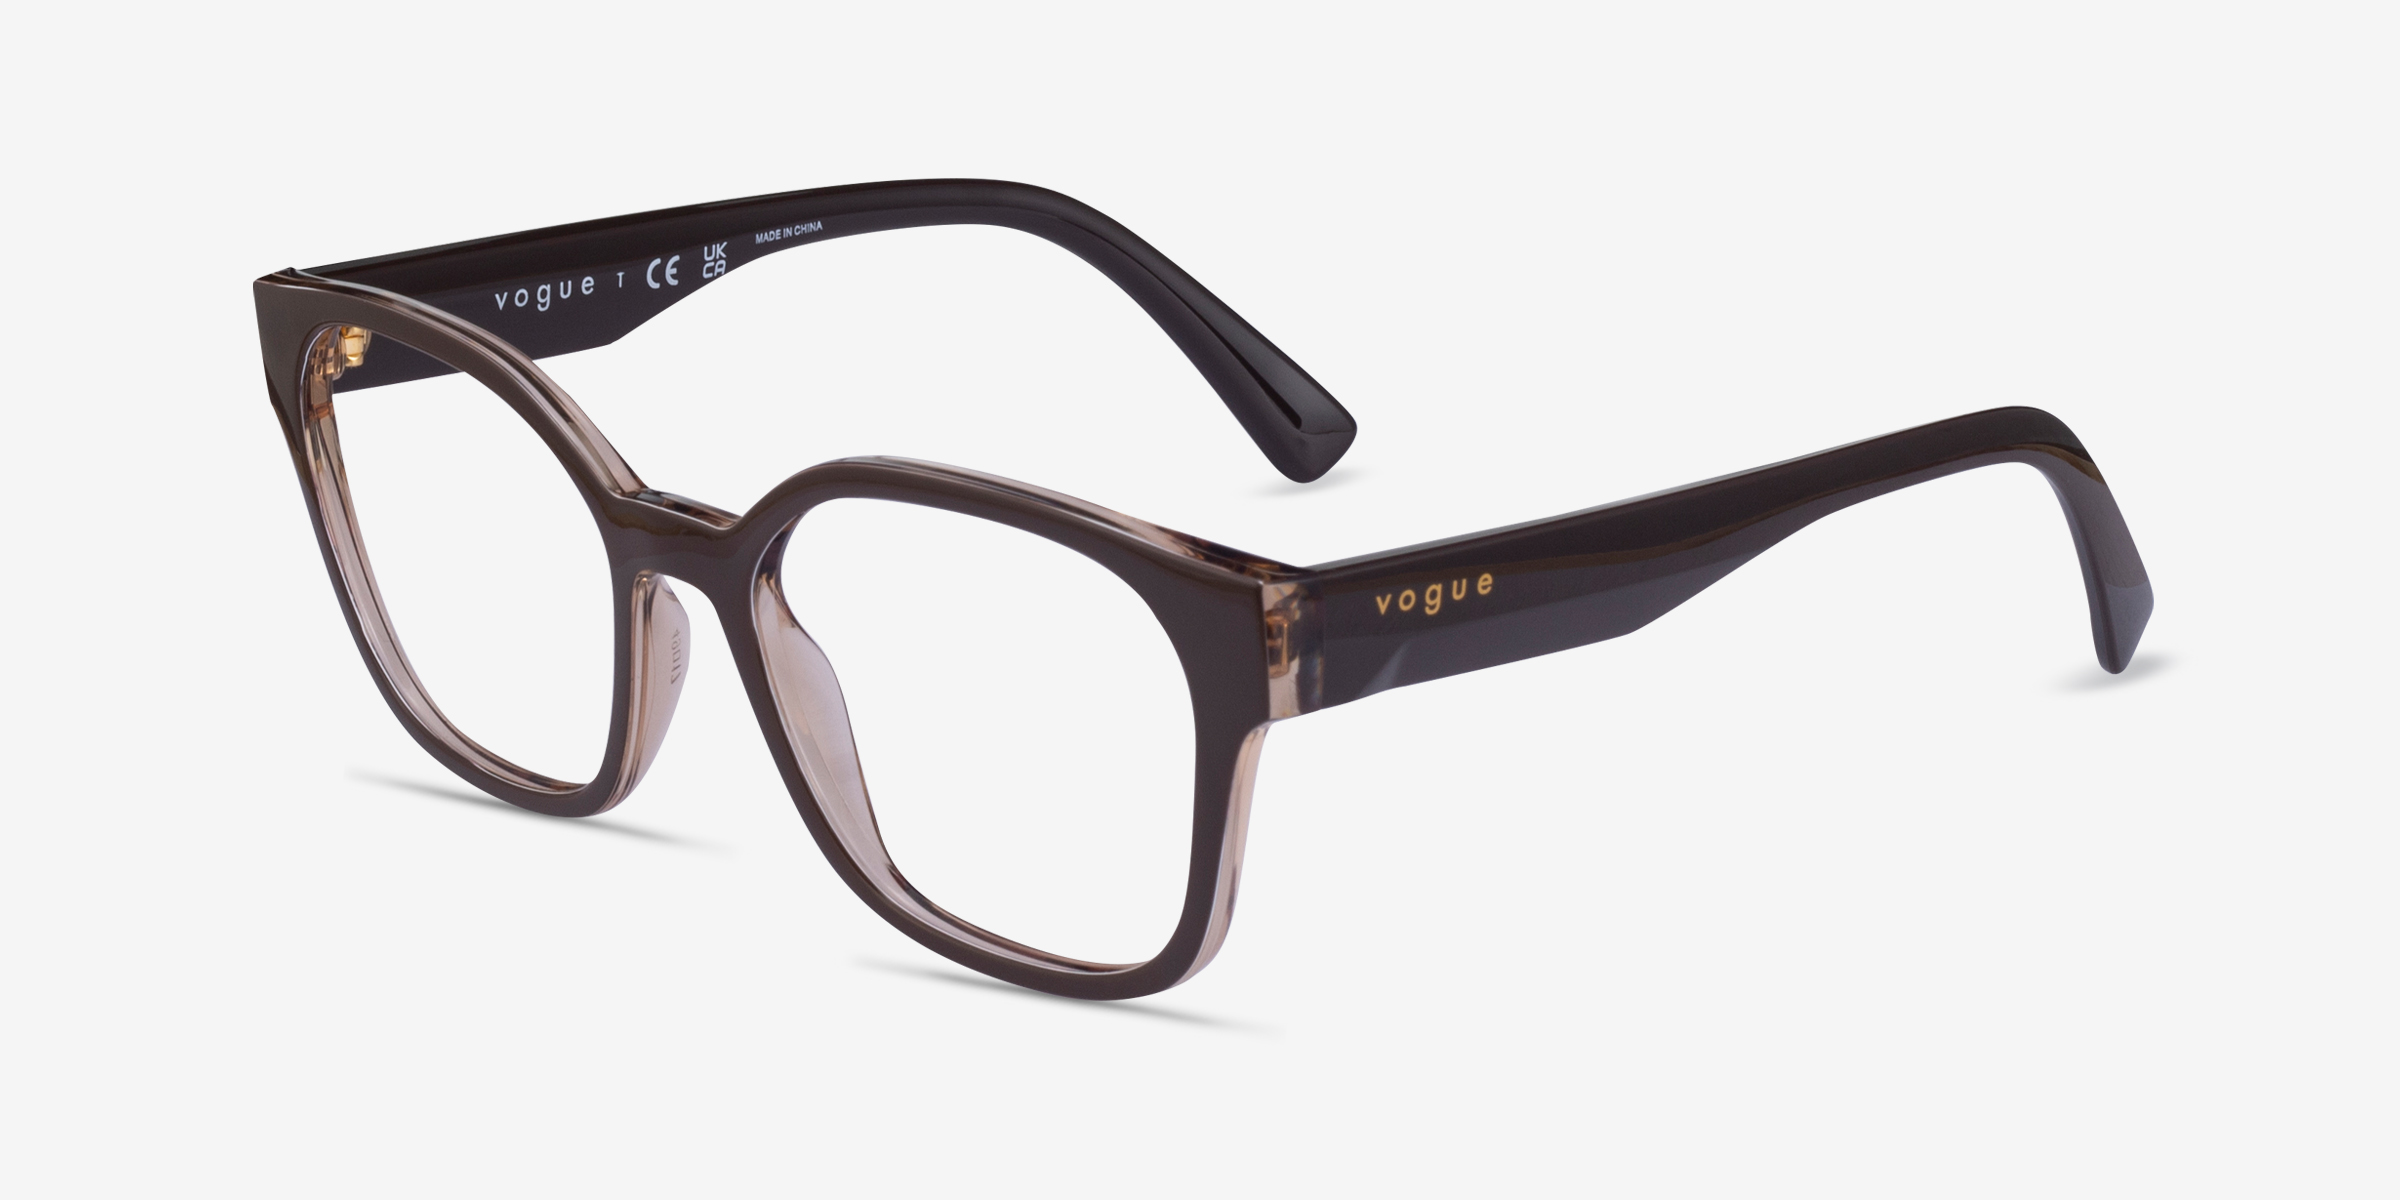 Vogue Eyewear Vo5407 Square Brown Floral Frame Glasses For Women Eyebuydirect